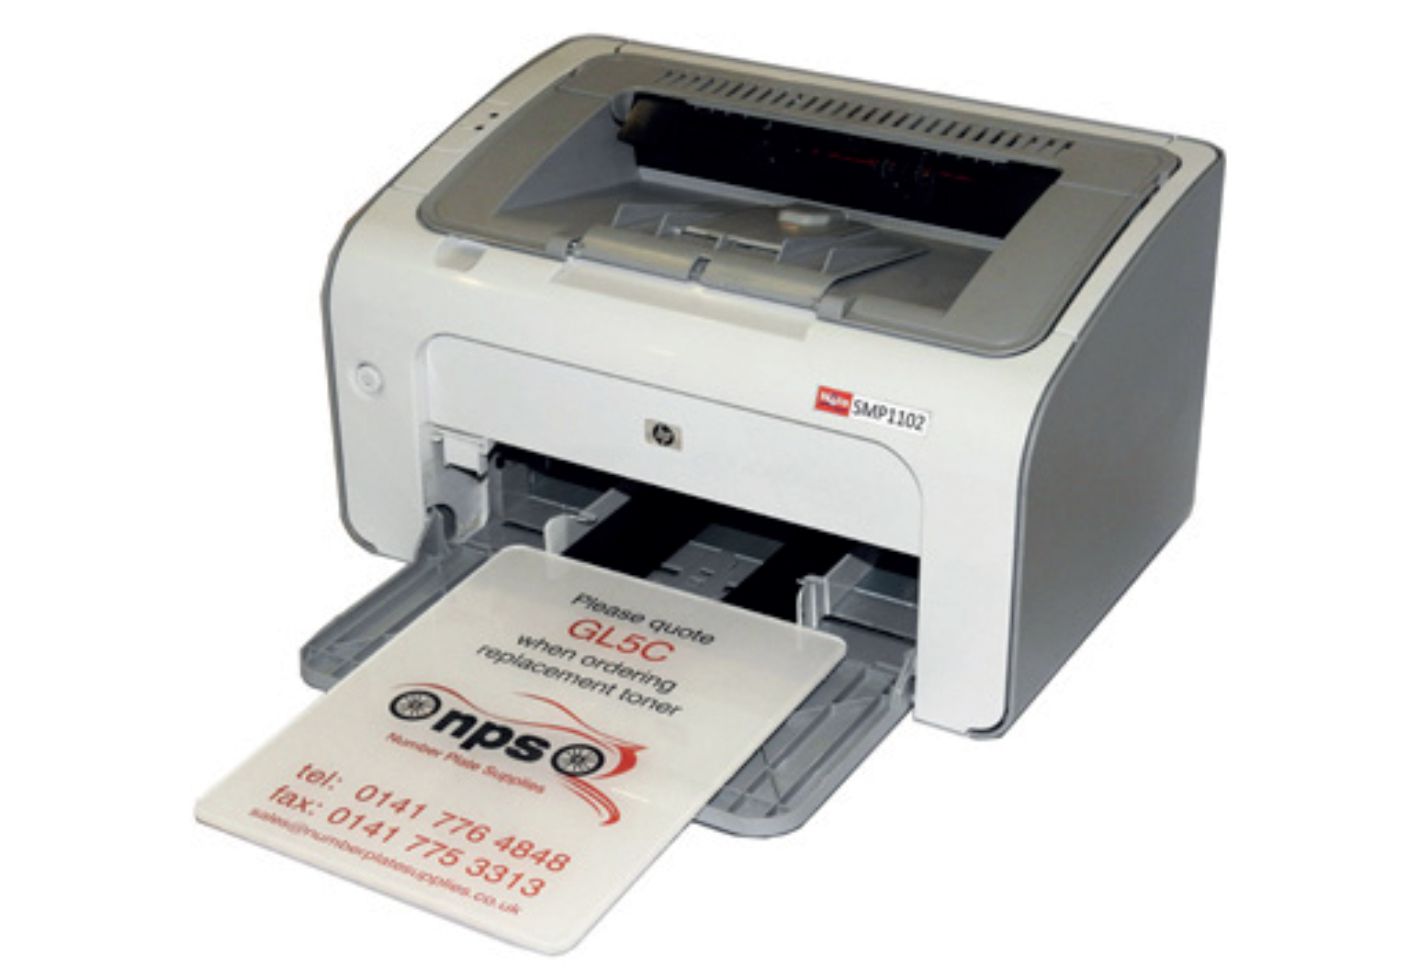 Image Of A Printer